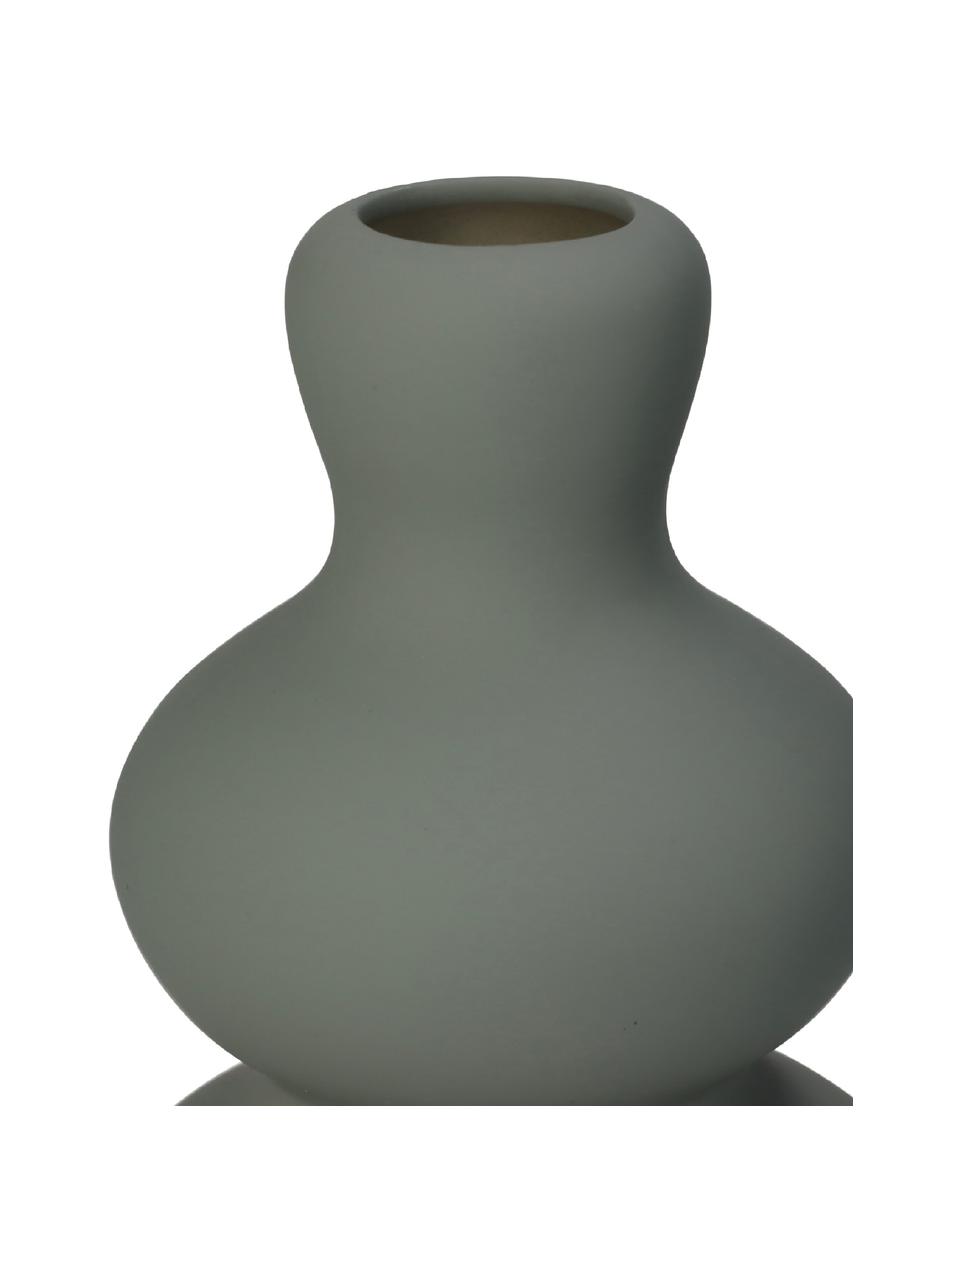 Vase Fine aus Steingut in Grün-Grau, Steingut, Grün-Grau, Ø 14 x H 20 cm